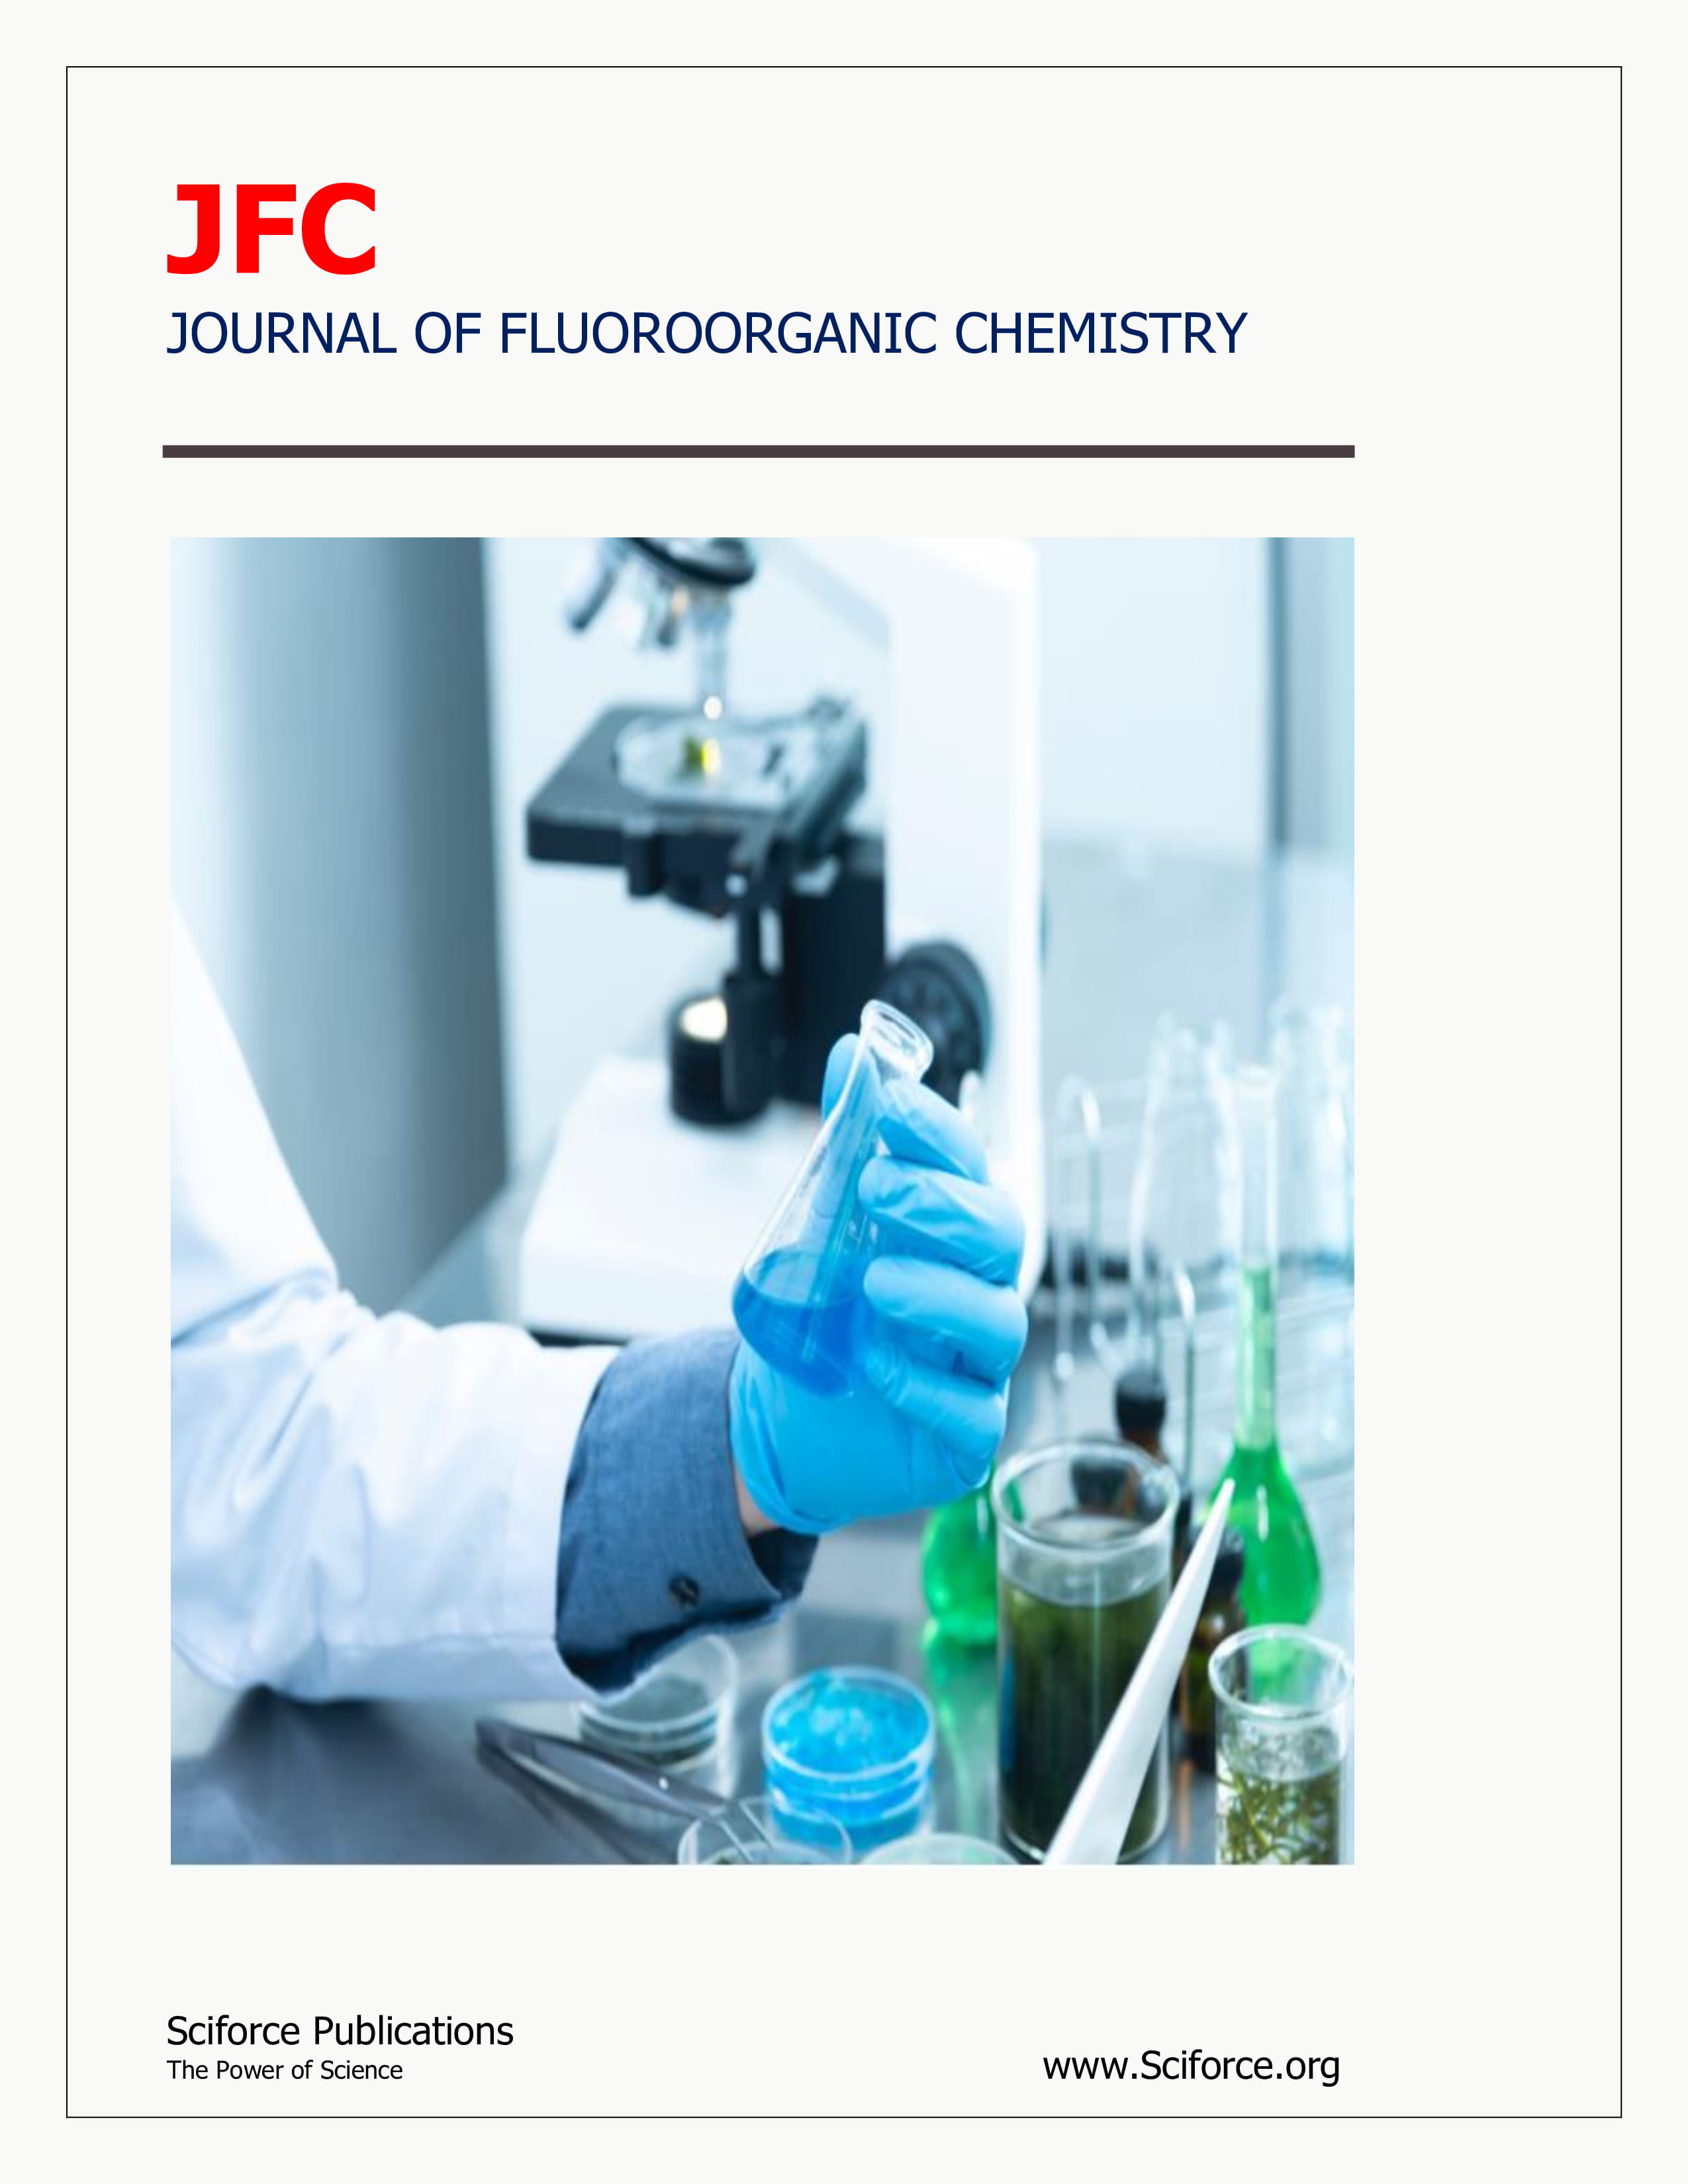 Journal of Fluoroorganic Chemistry